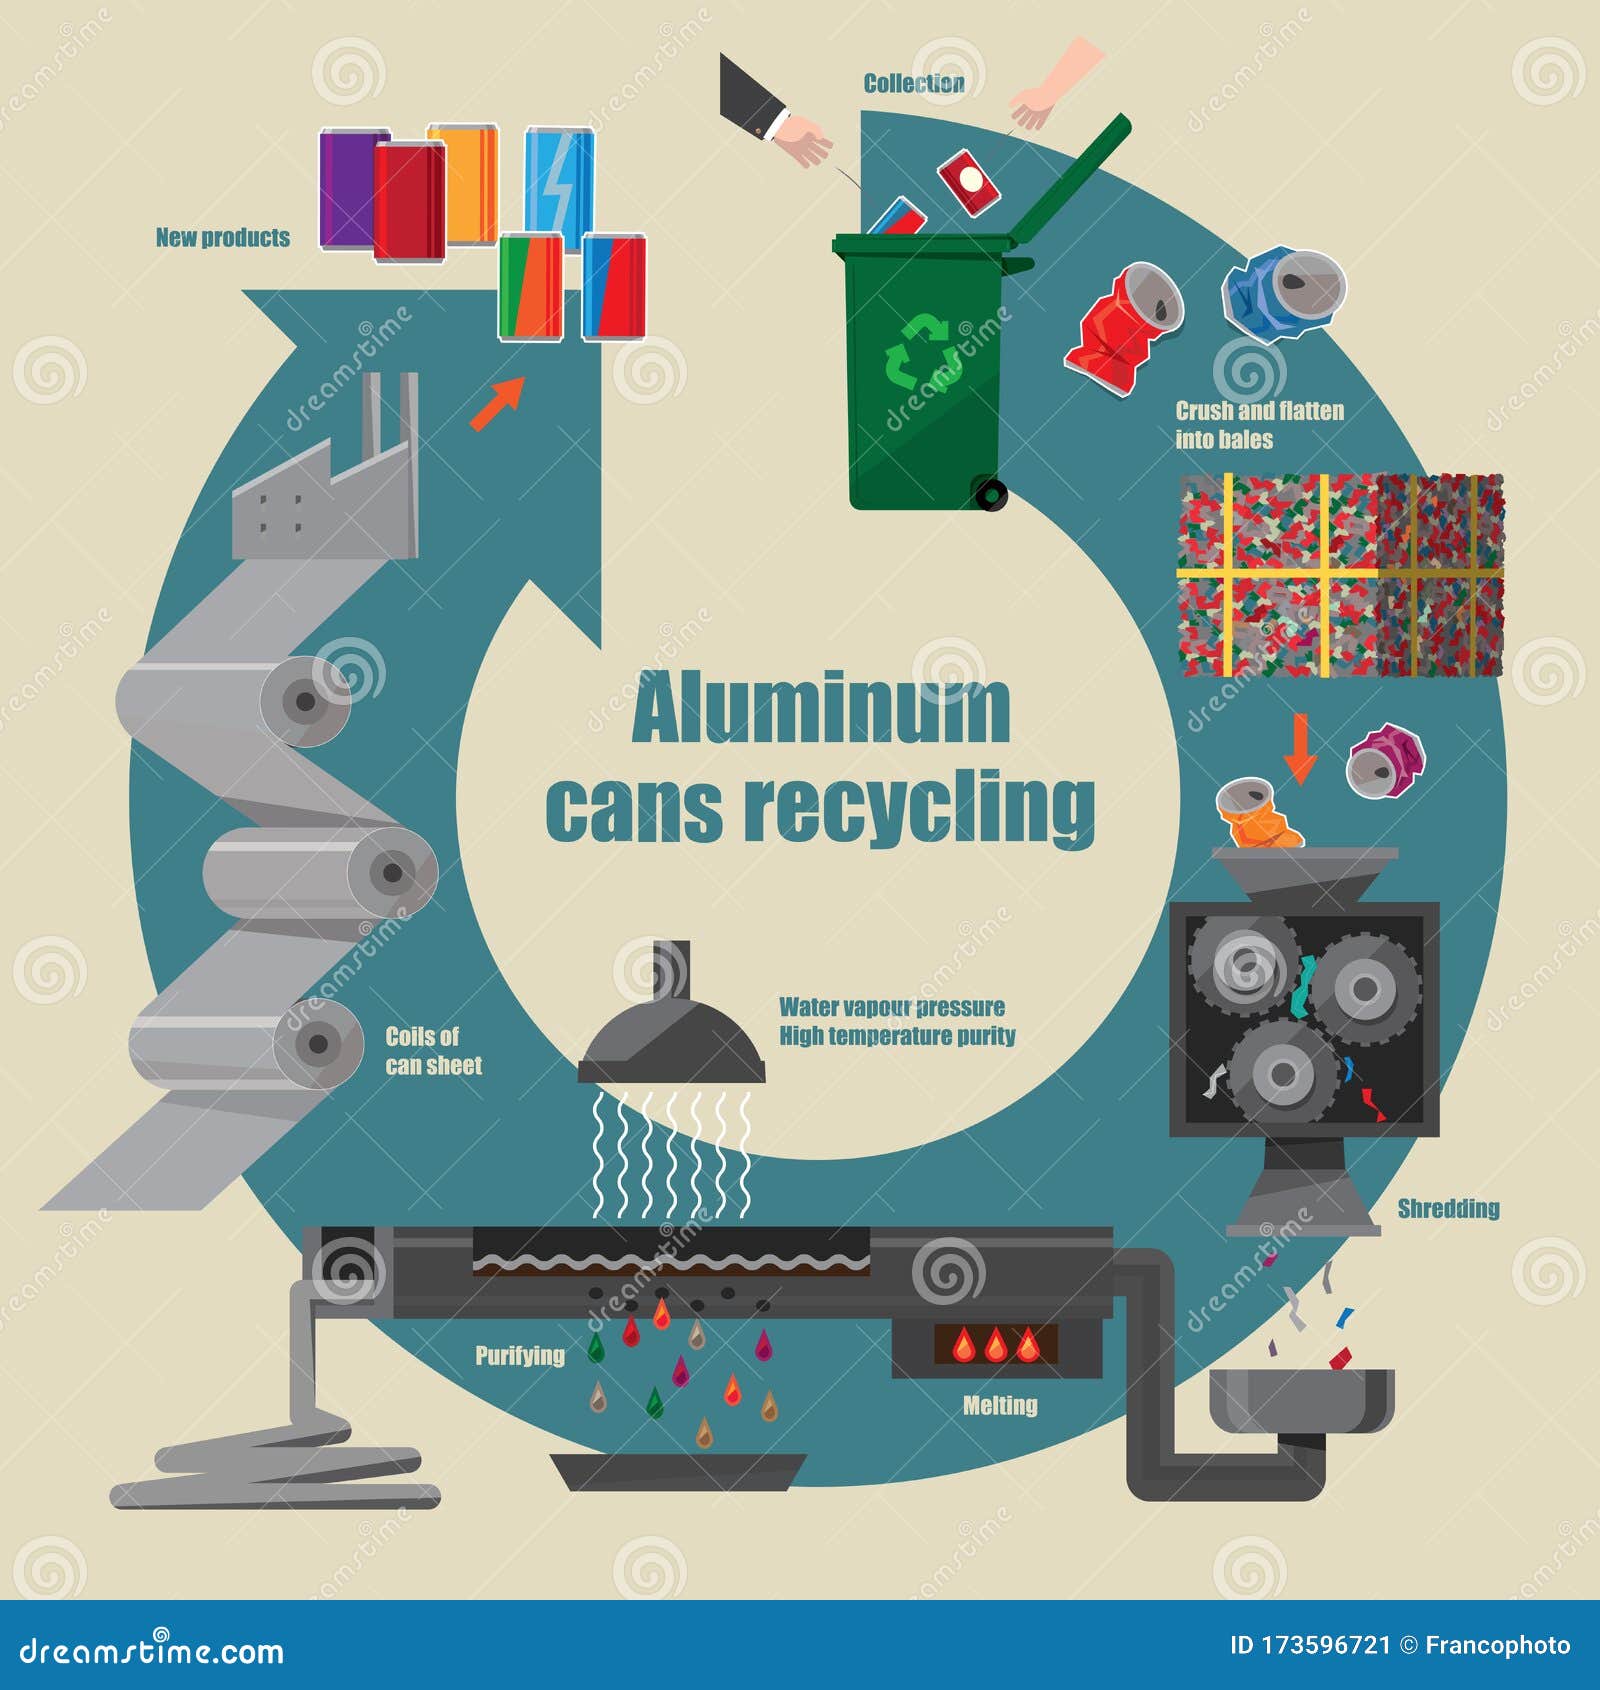 aluminium recycling business plan